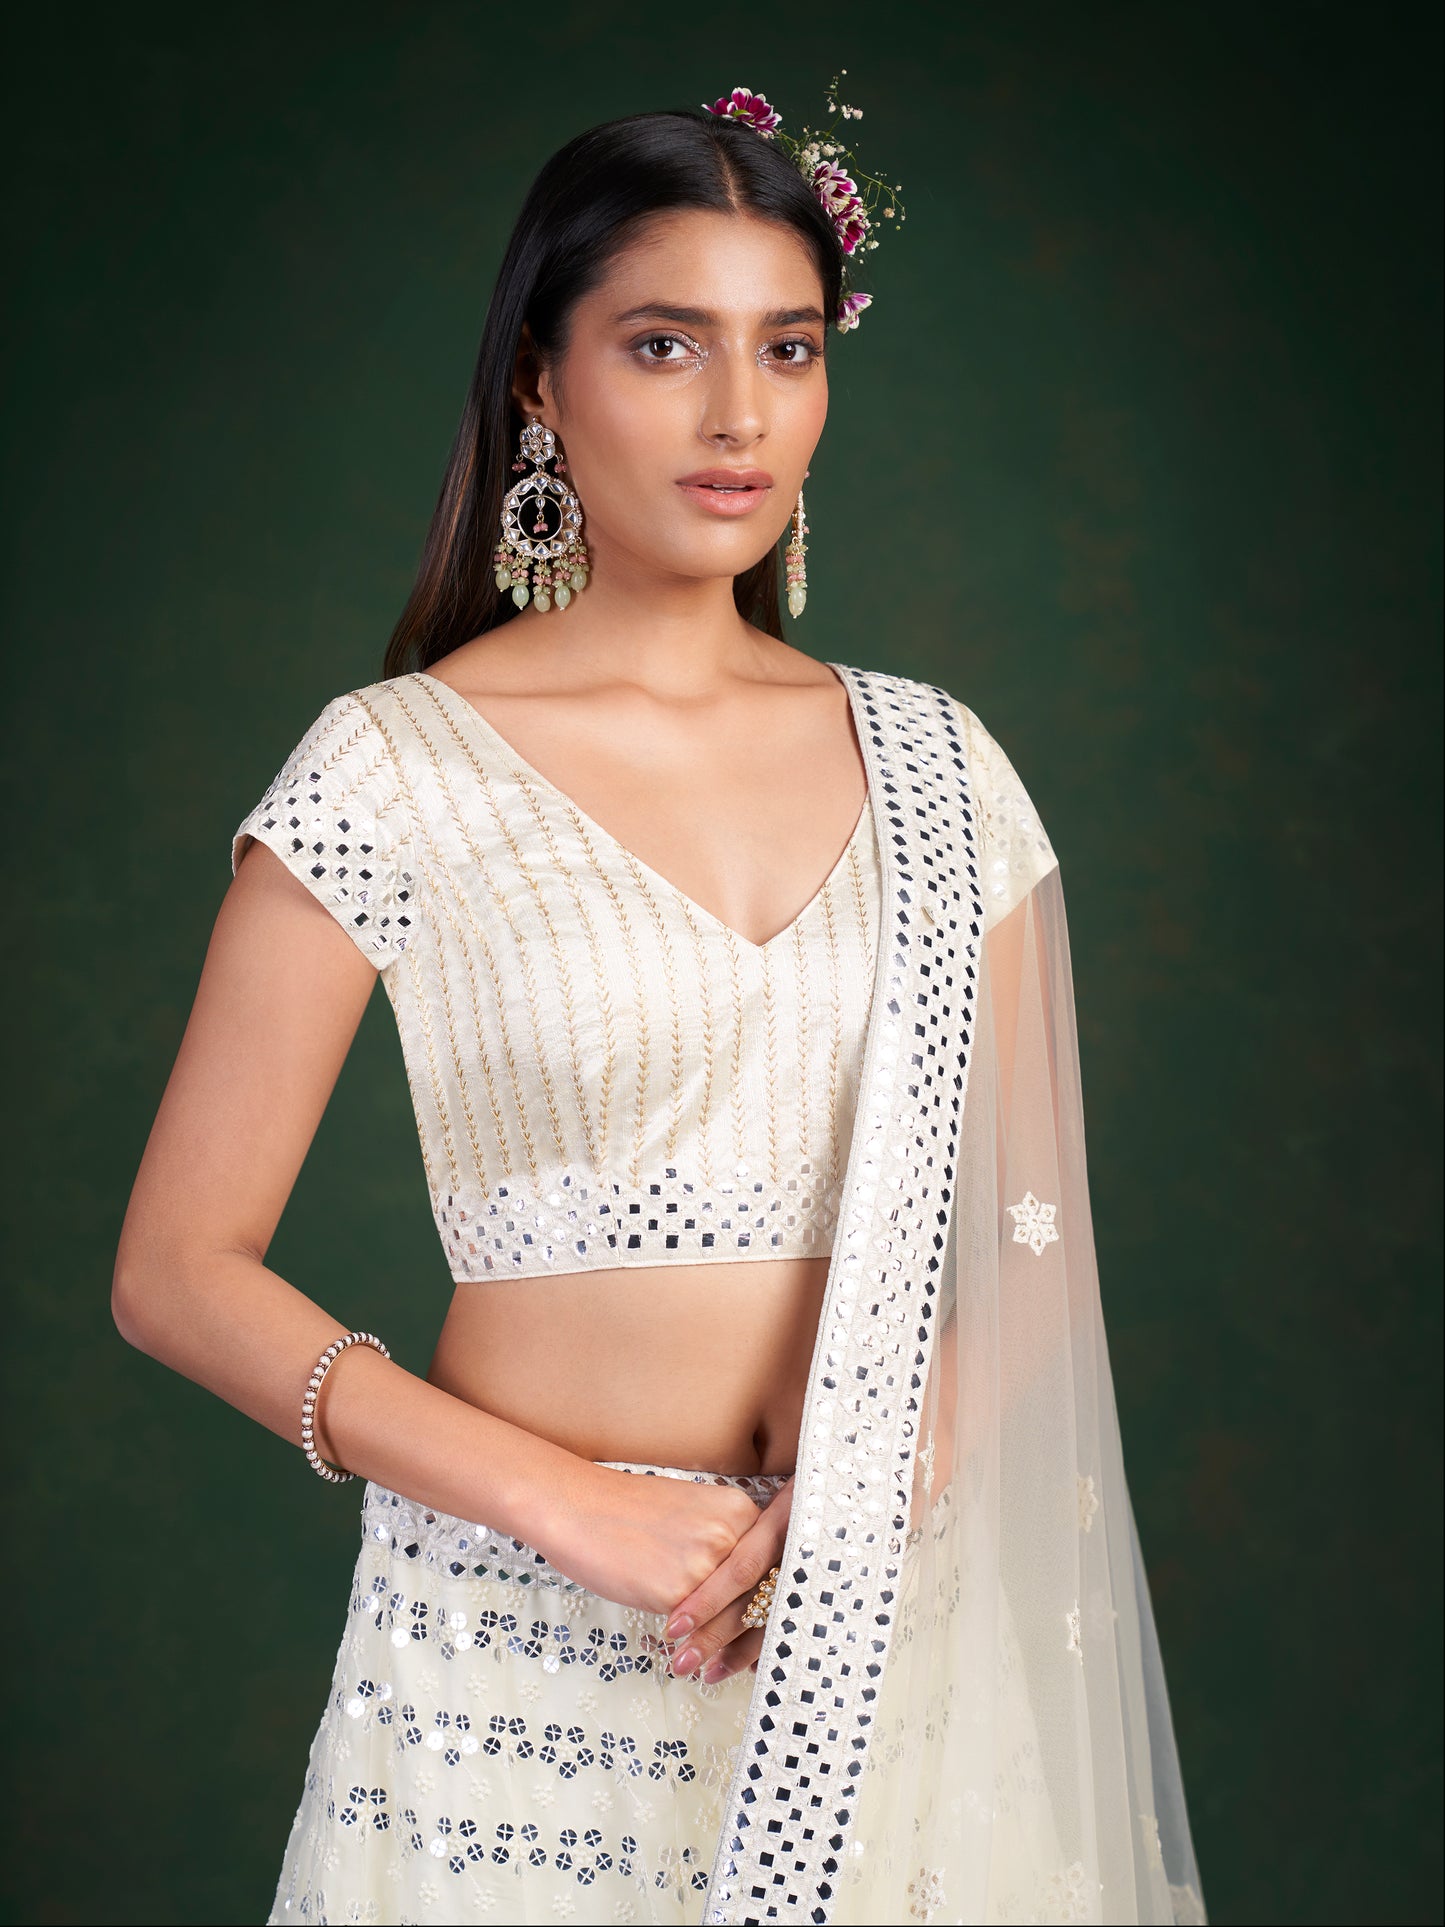 Stunning White Color Designer Lehenga Choli Buy Now